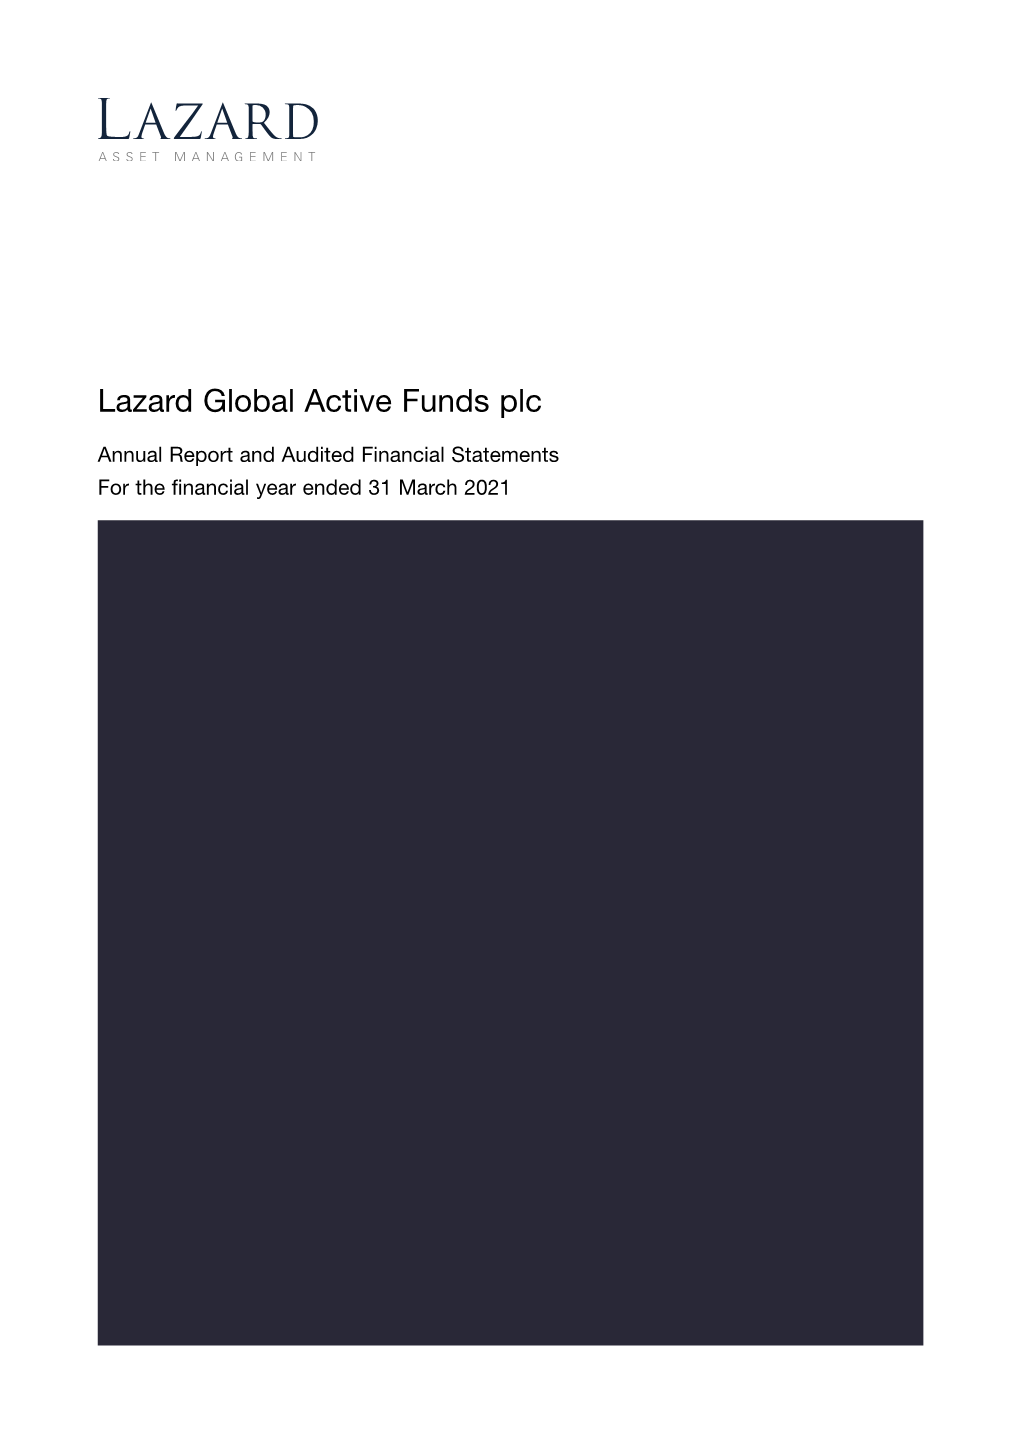 Lazard Global Active Funds Plc